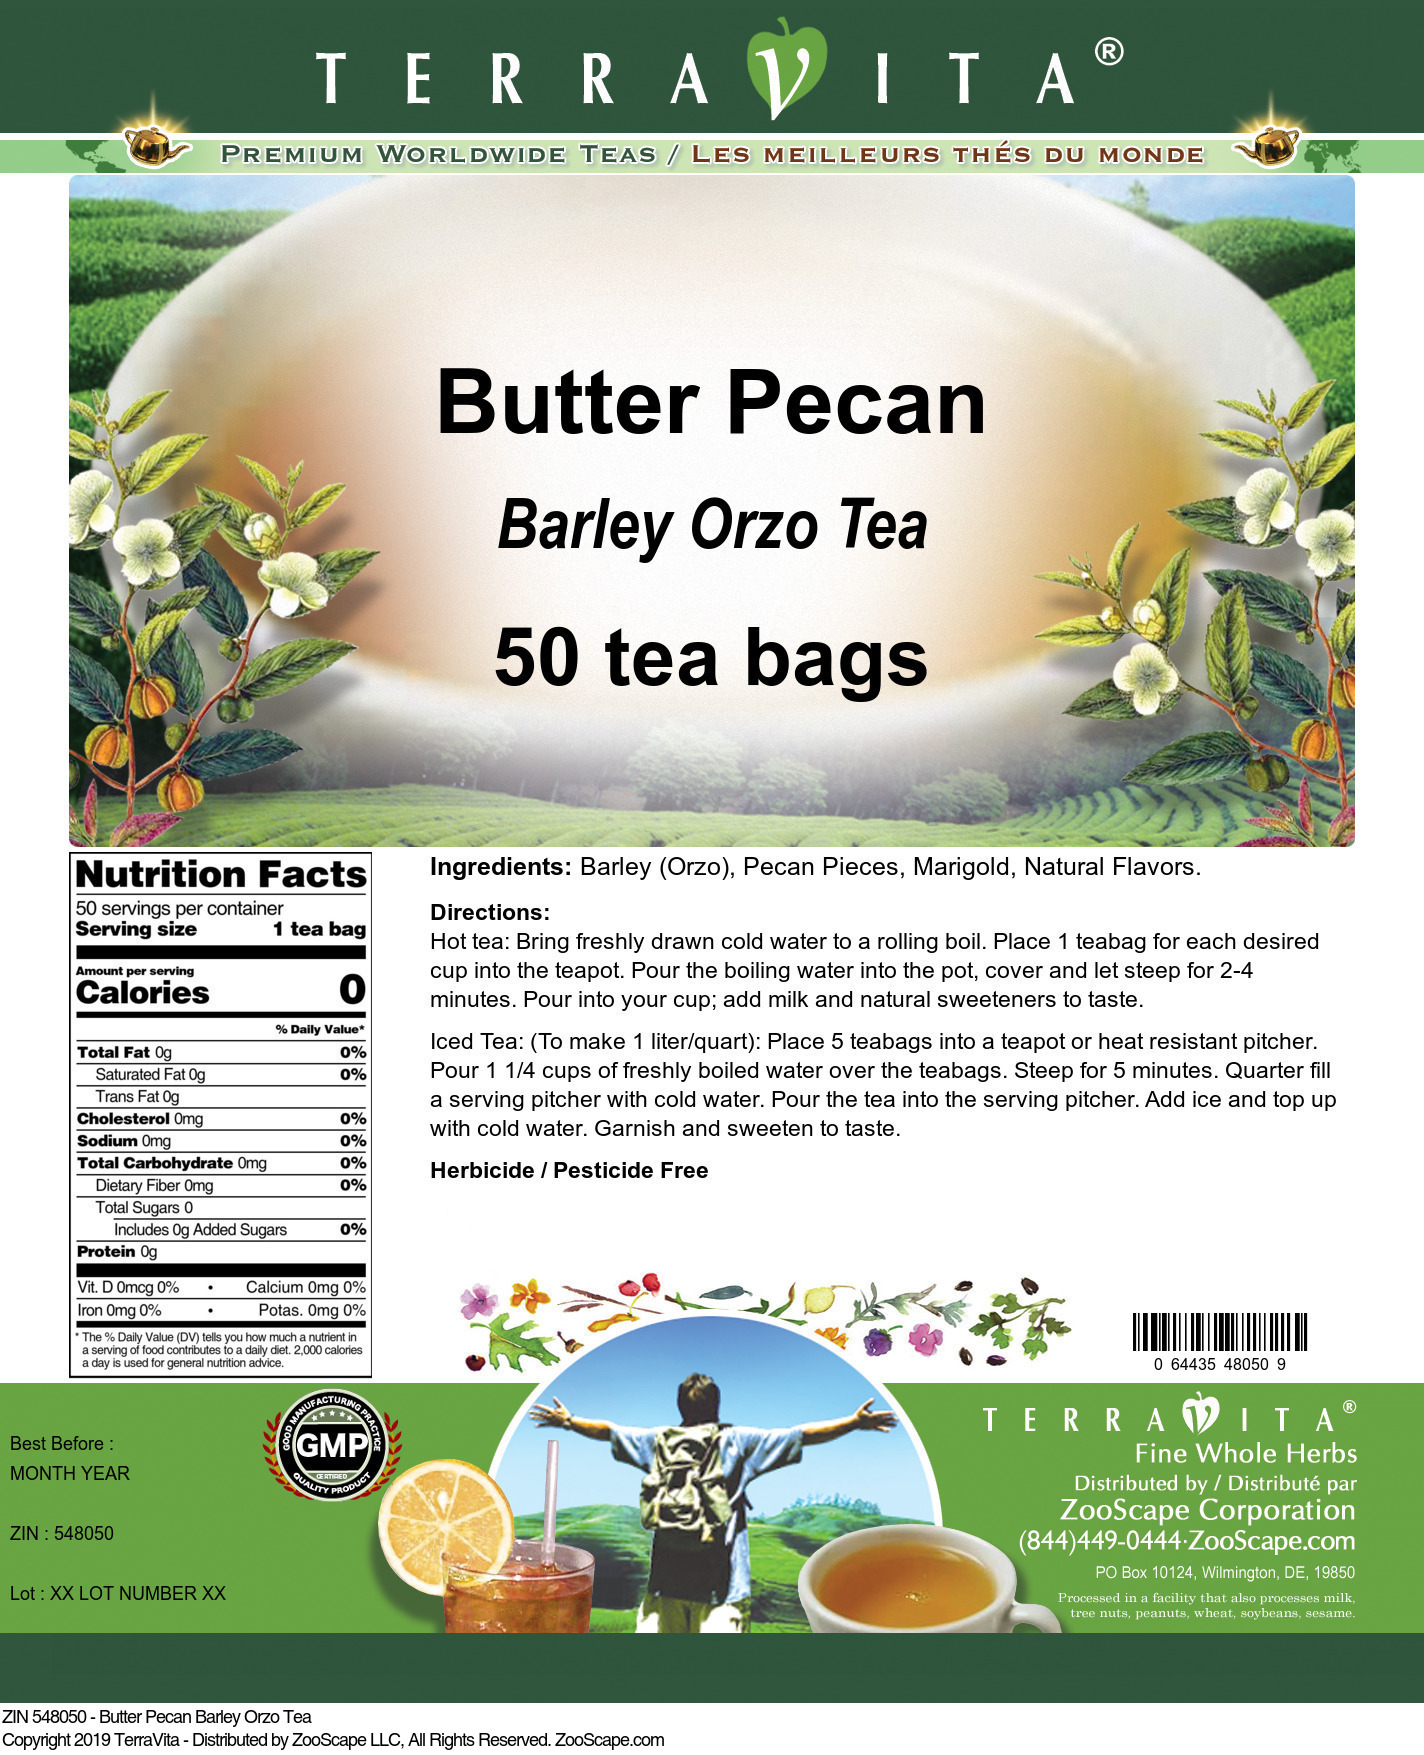 Butter Pecan Barley Orzo Tea - Label